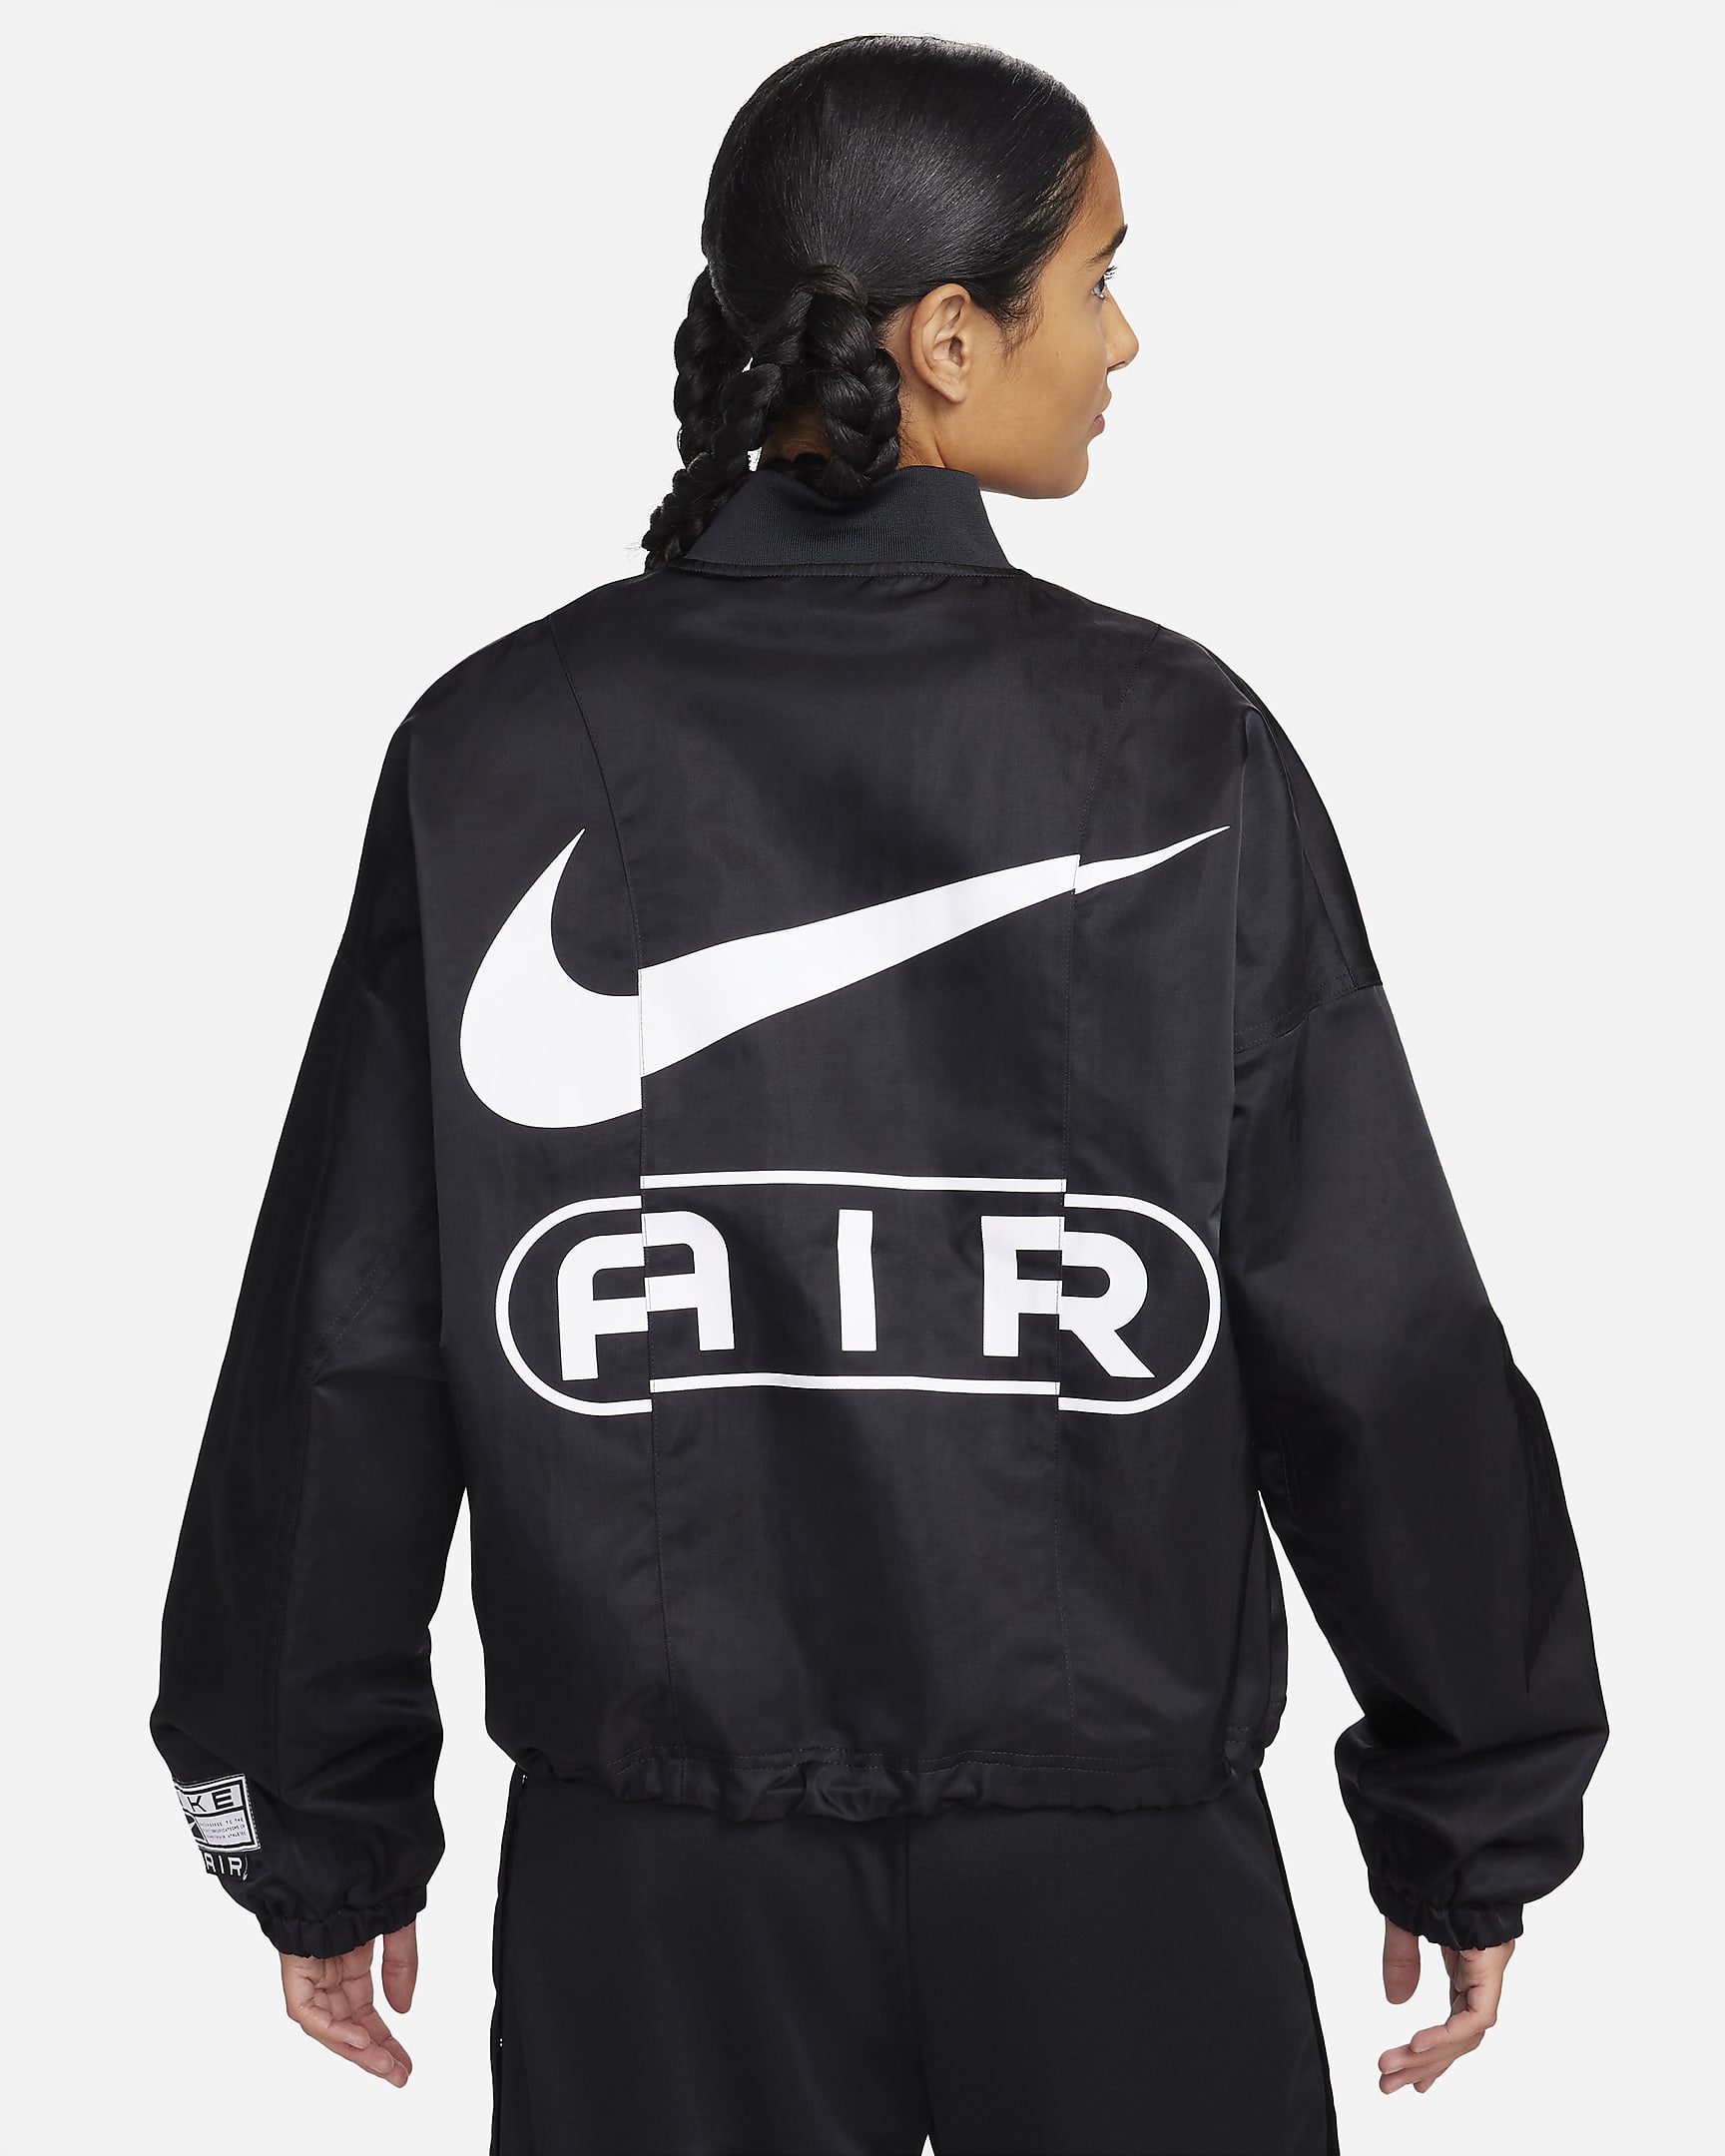 Nike Air Women's Oversized Woven Bomber Jacket. Nike.com